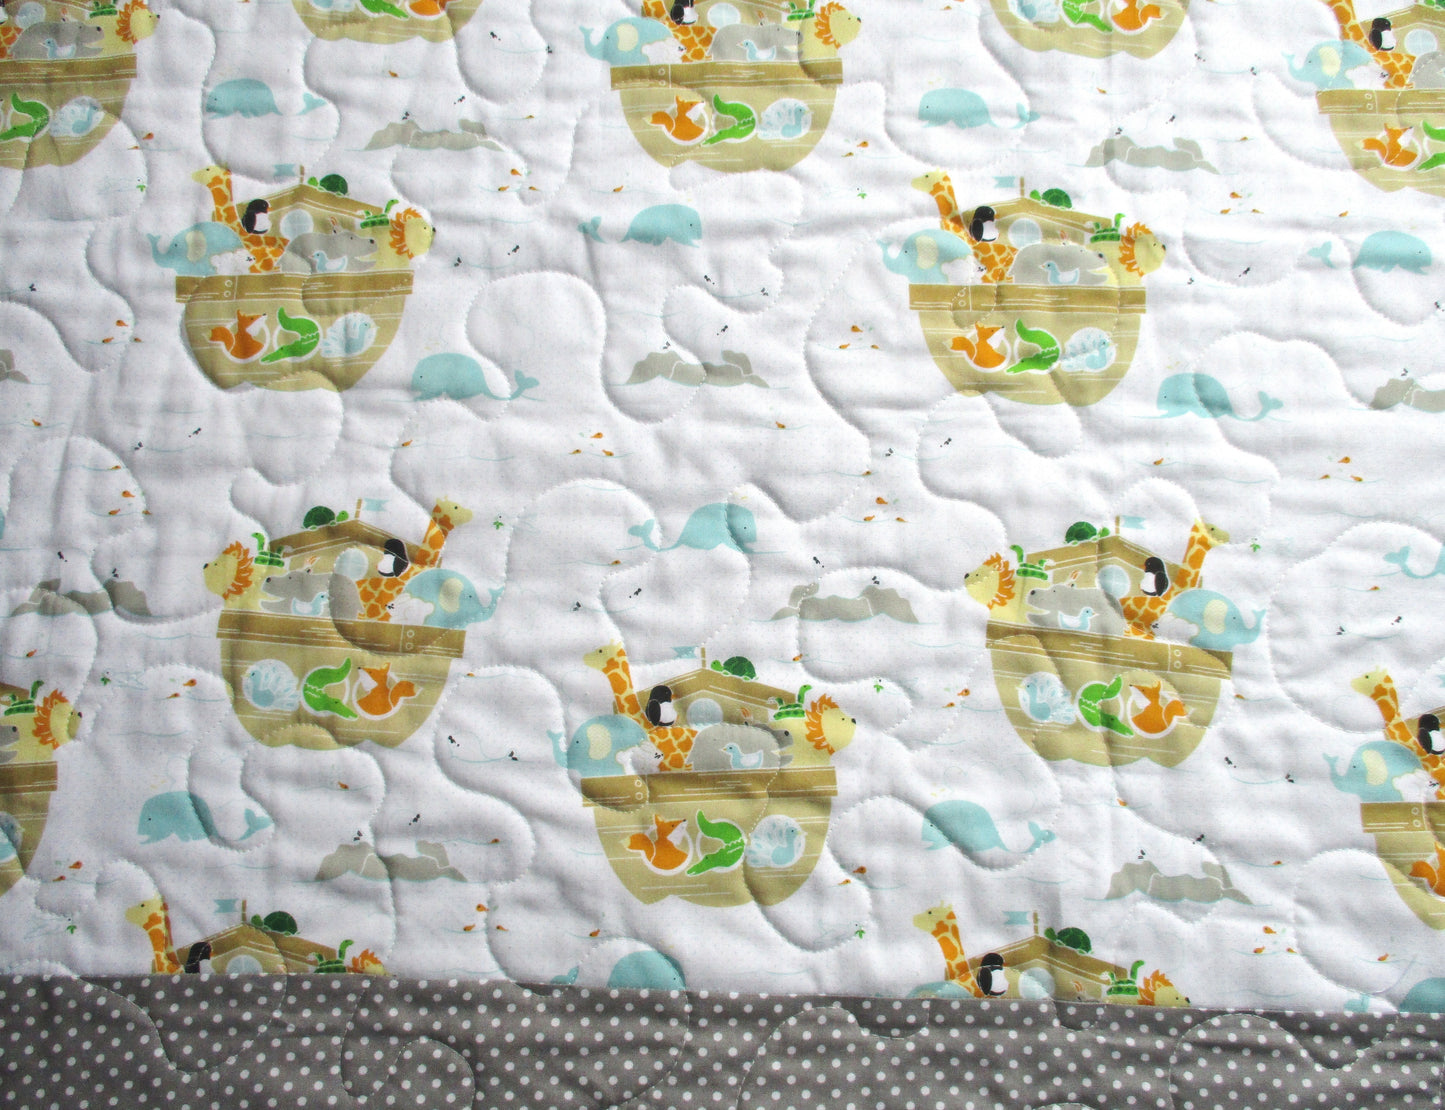 NOAH'S ARK Pastel Quilted Blanket Nursery Child Toddler Bedding to Adult Lap Blanket